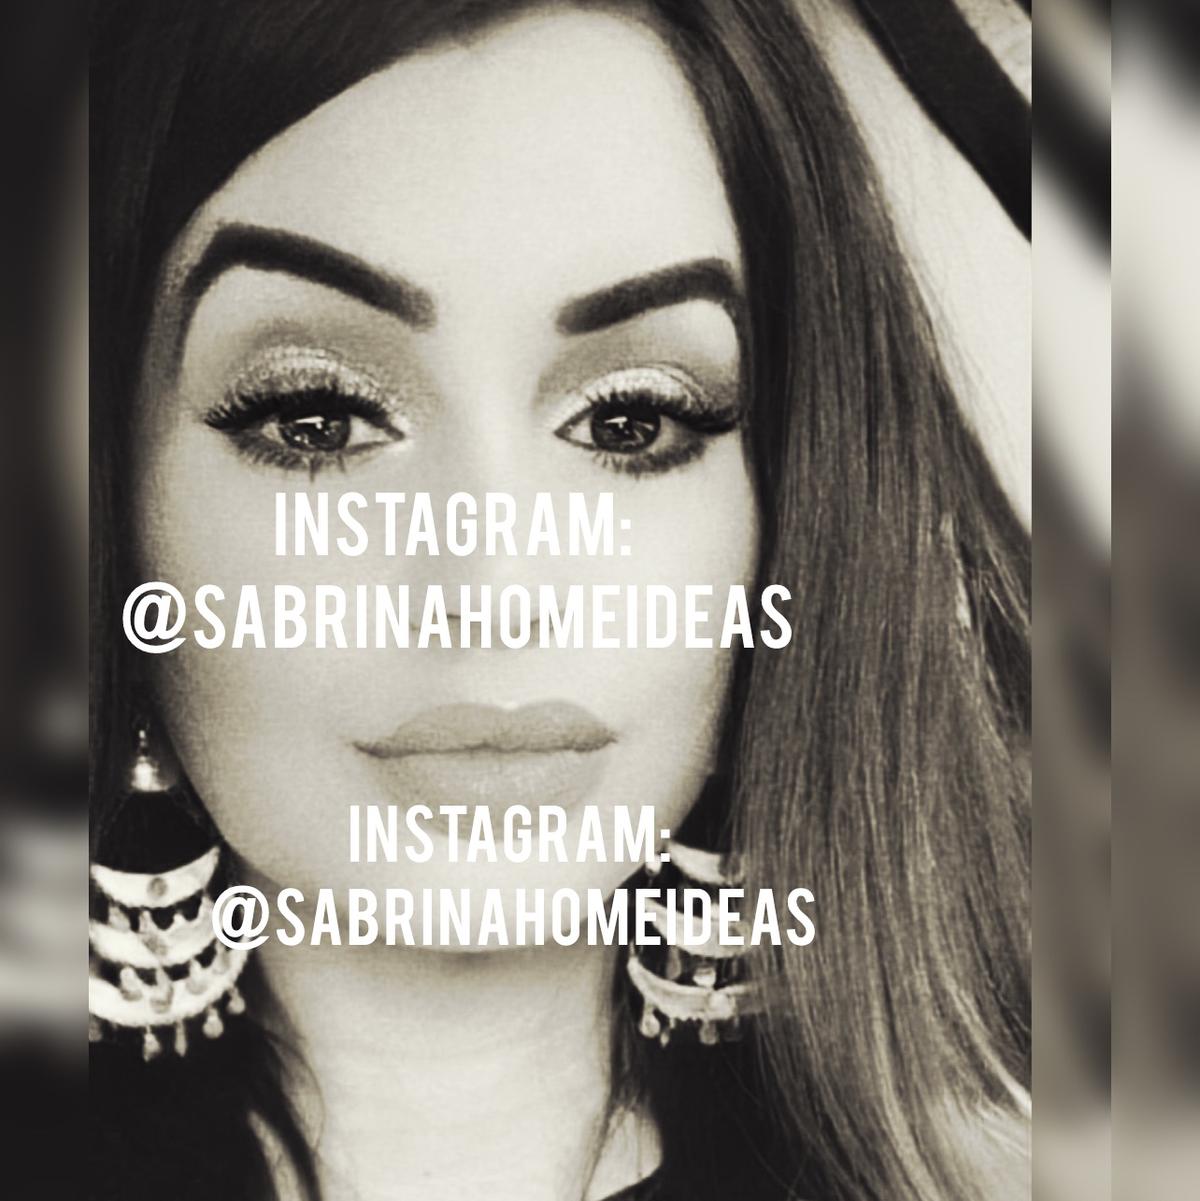 Sabrinahomeidea's images